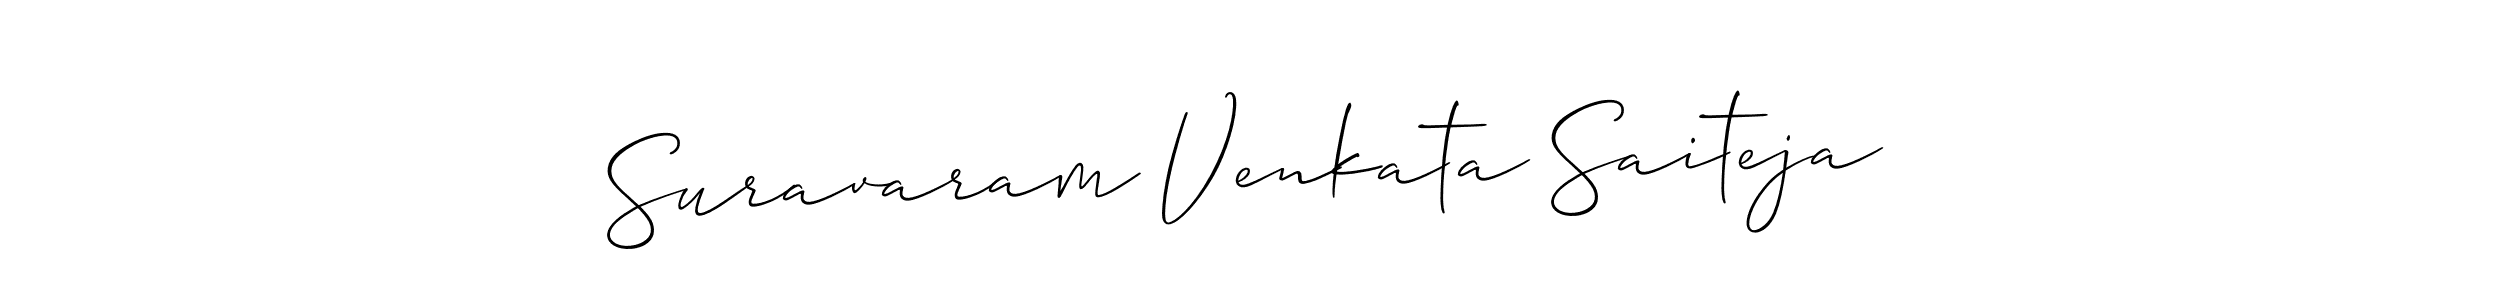 How to Draw Suravaram Venkata Saiteja signature style? Allison_Script is a latest design signature styles for name Suravaram Venkata Saiteja. Suravaram Venkata Saiteja signature style 2 images and pictures png